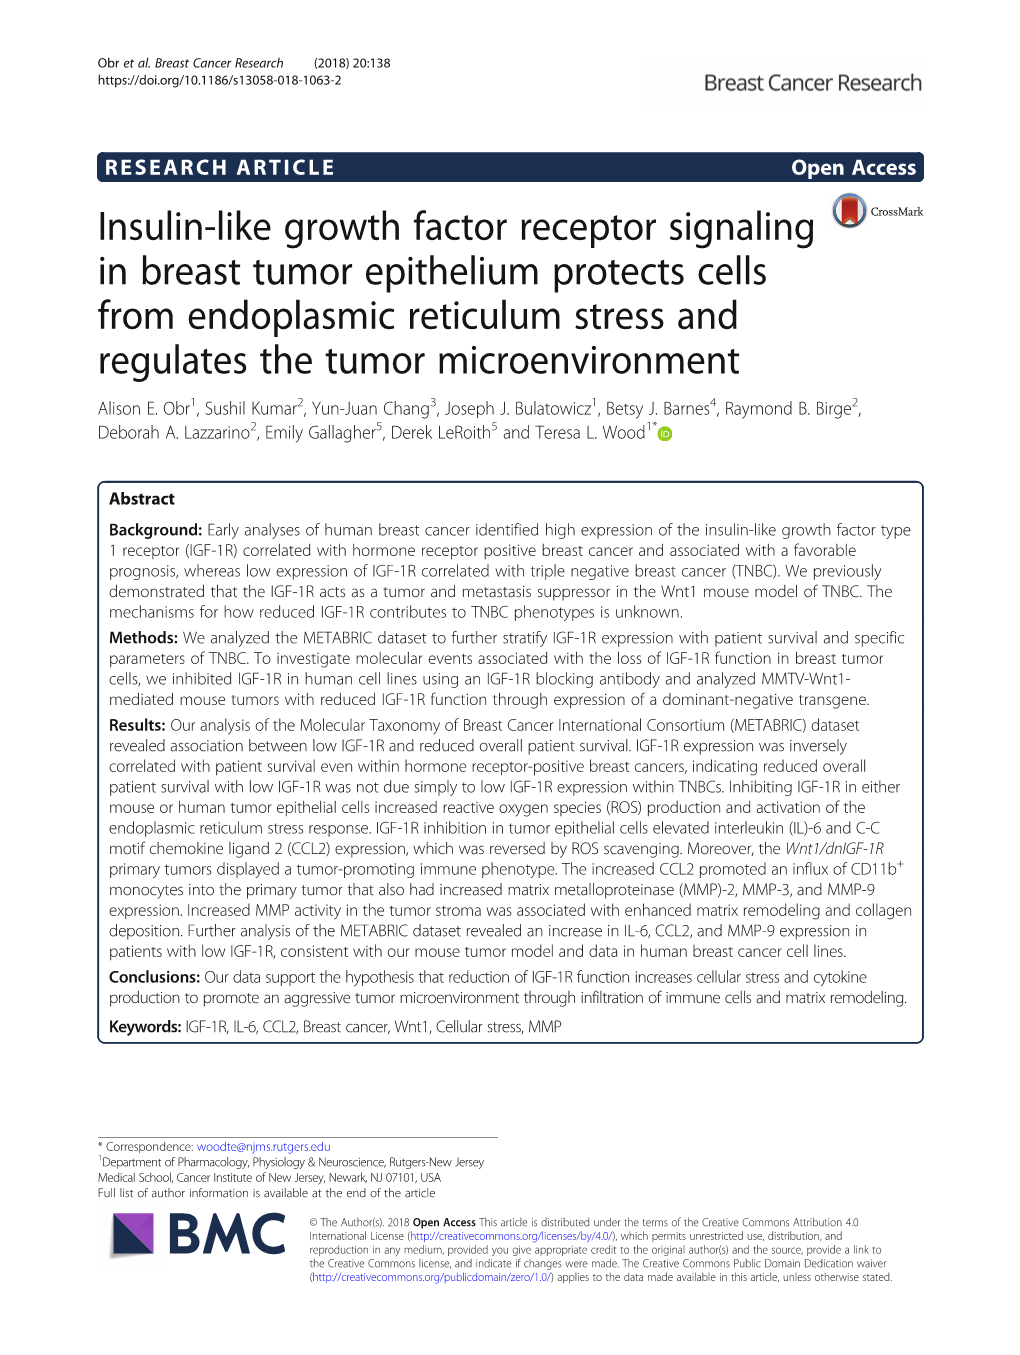 Insulin-Like Growth Factor Receptor Signaling